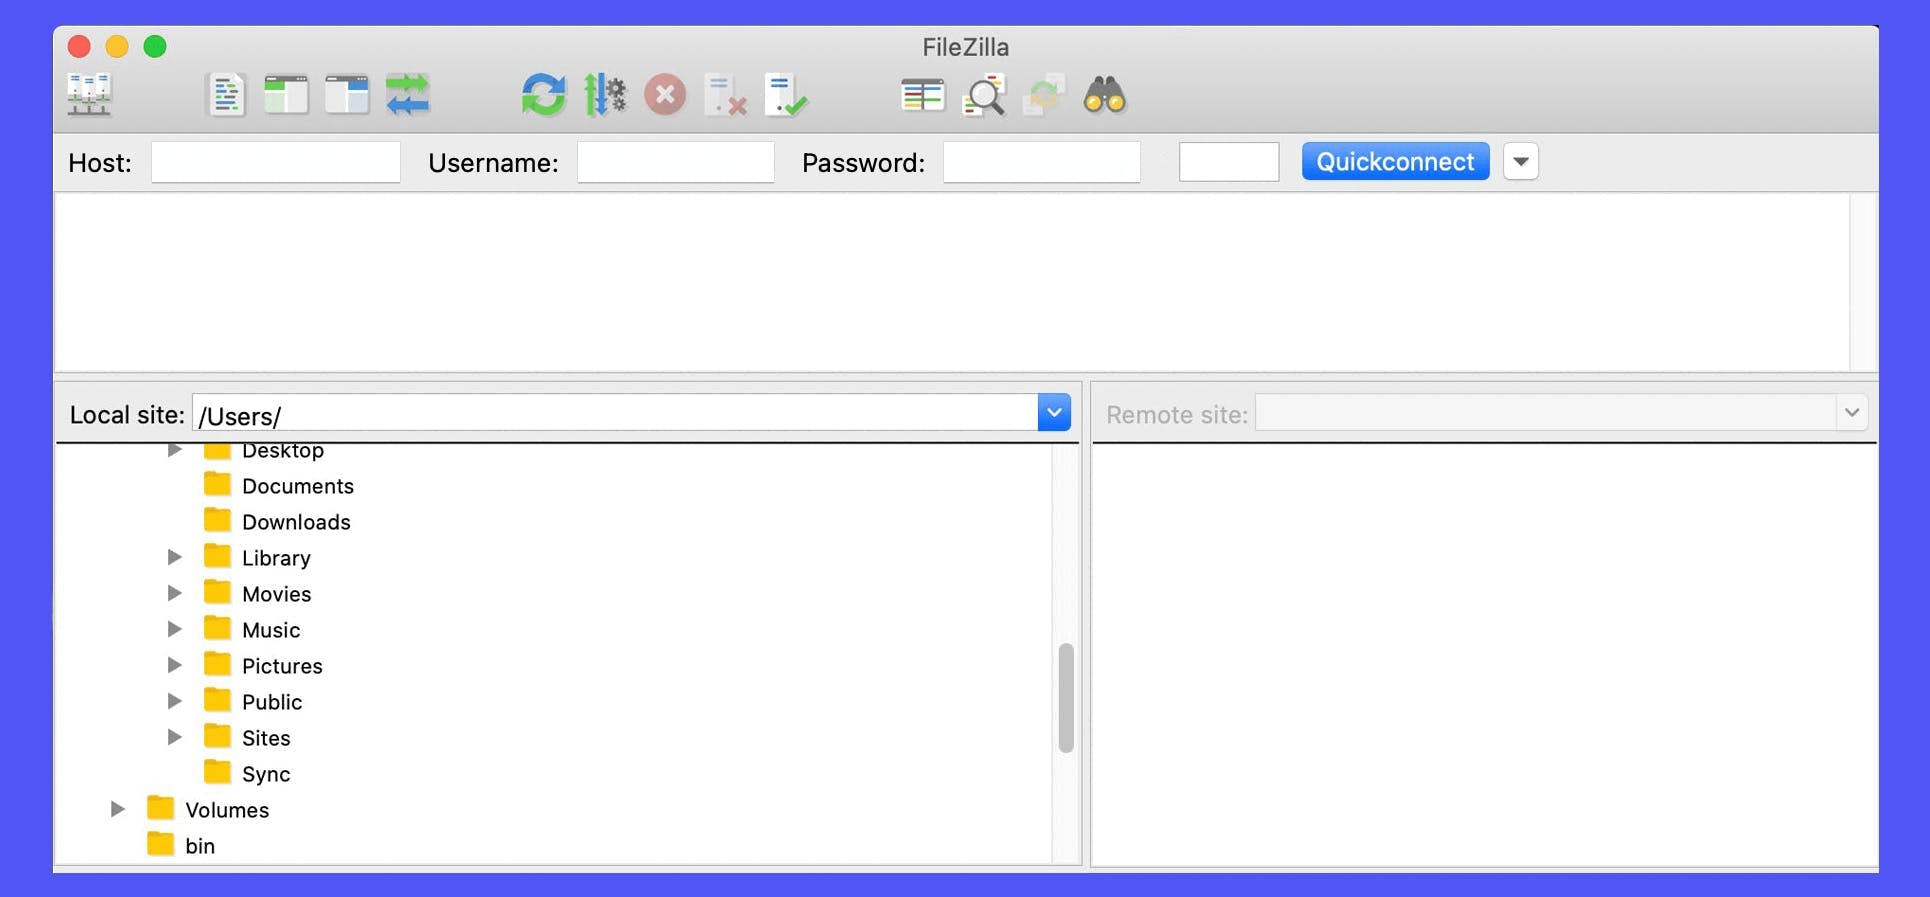 Downloading and opening FileZilla.